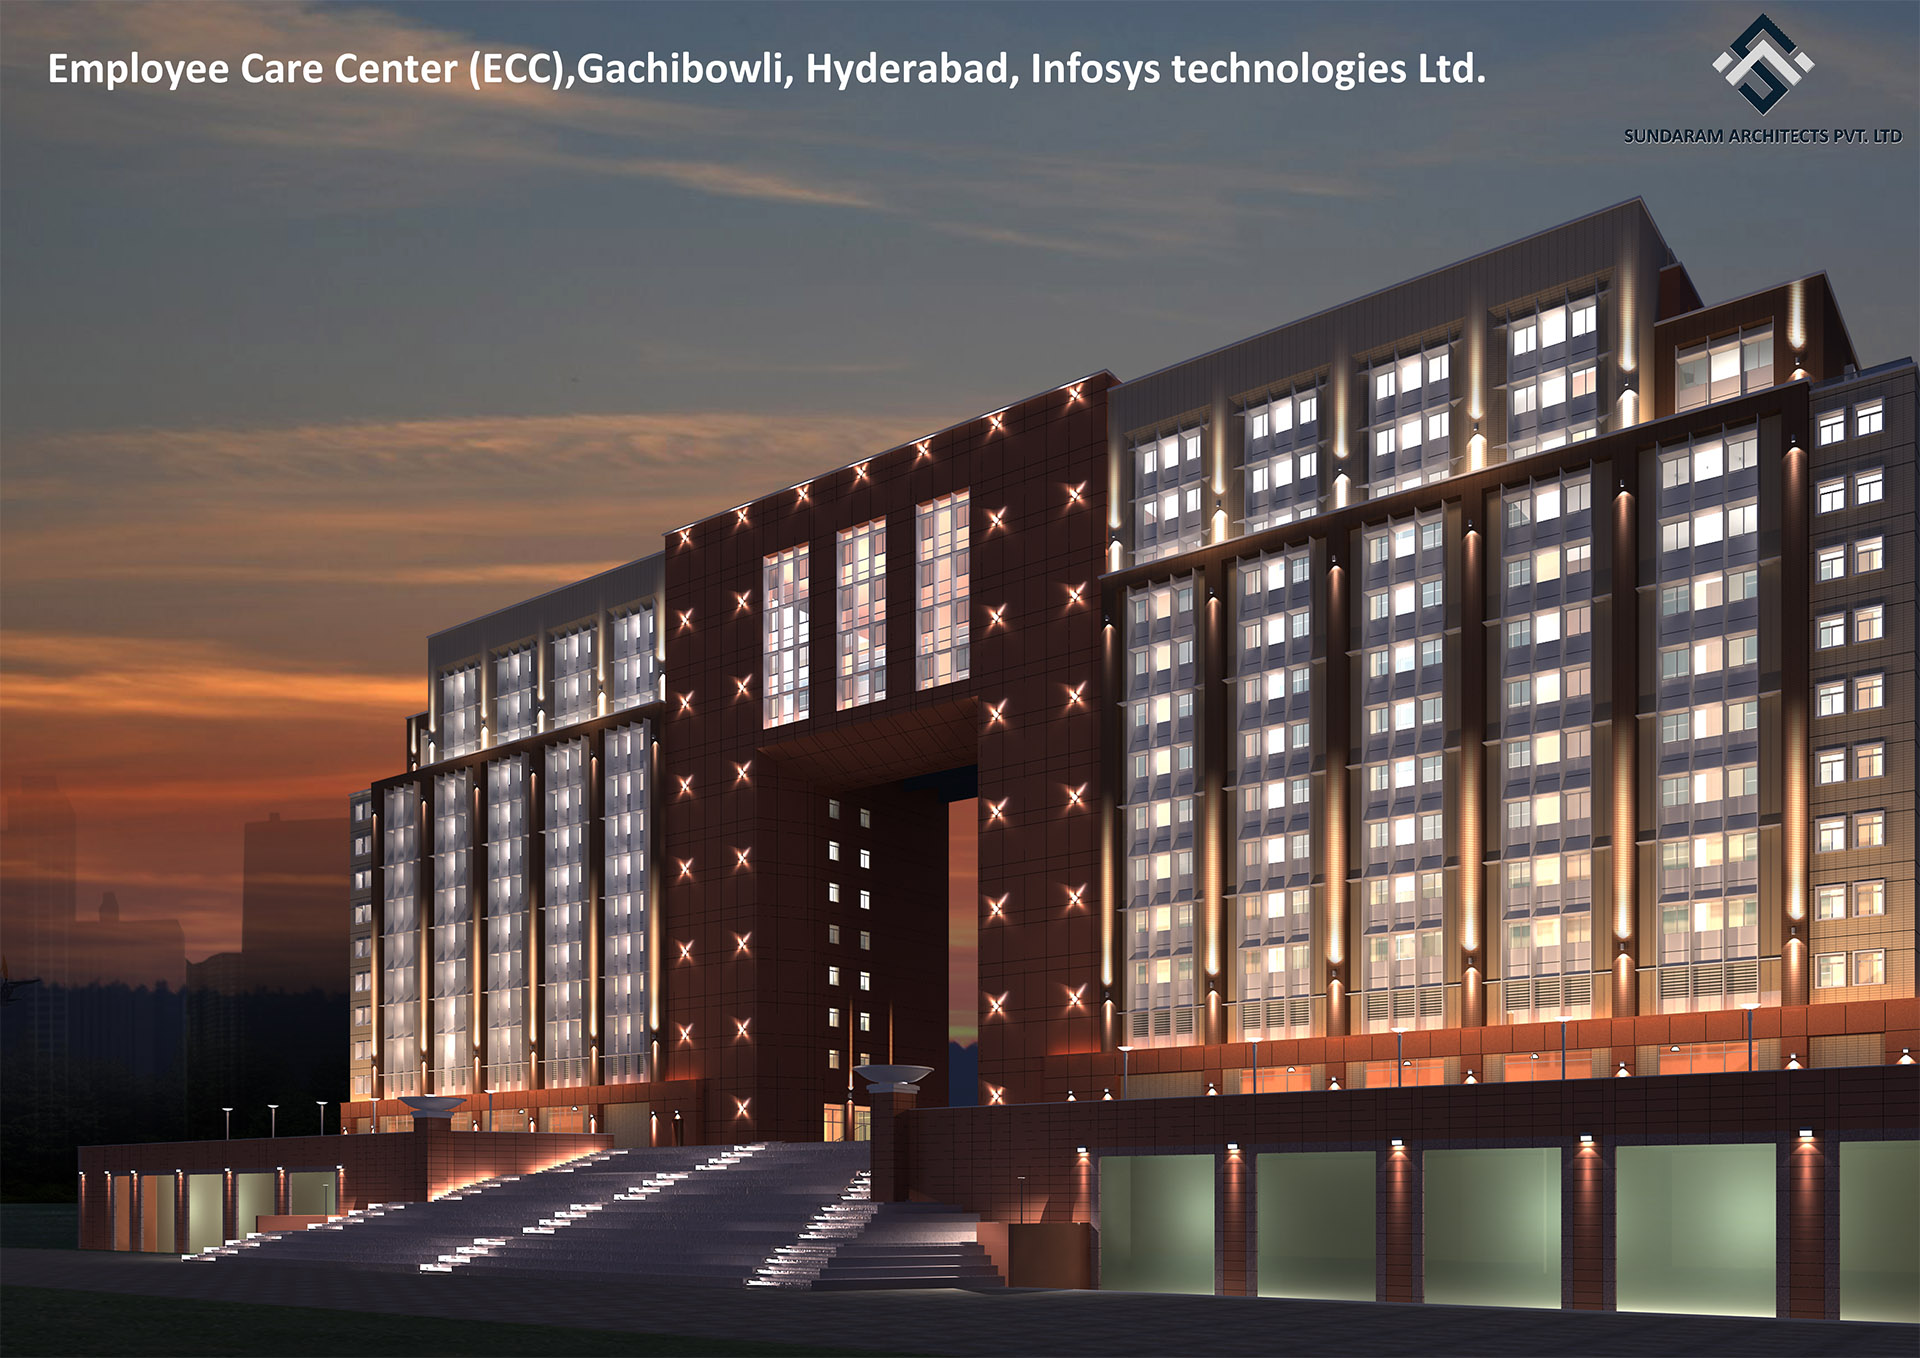 Employee Care Center (ECC), Gachibowli, Infosys Technologies Ltd, Hyderabad - Corporate Offices & IT Design